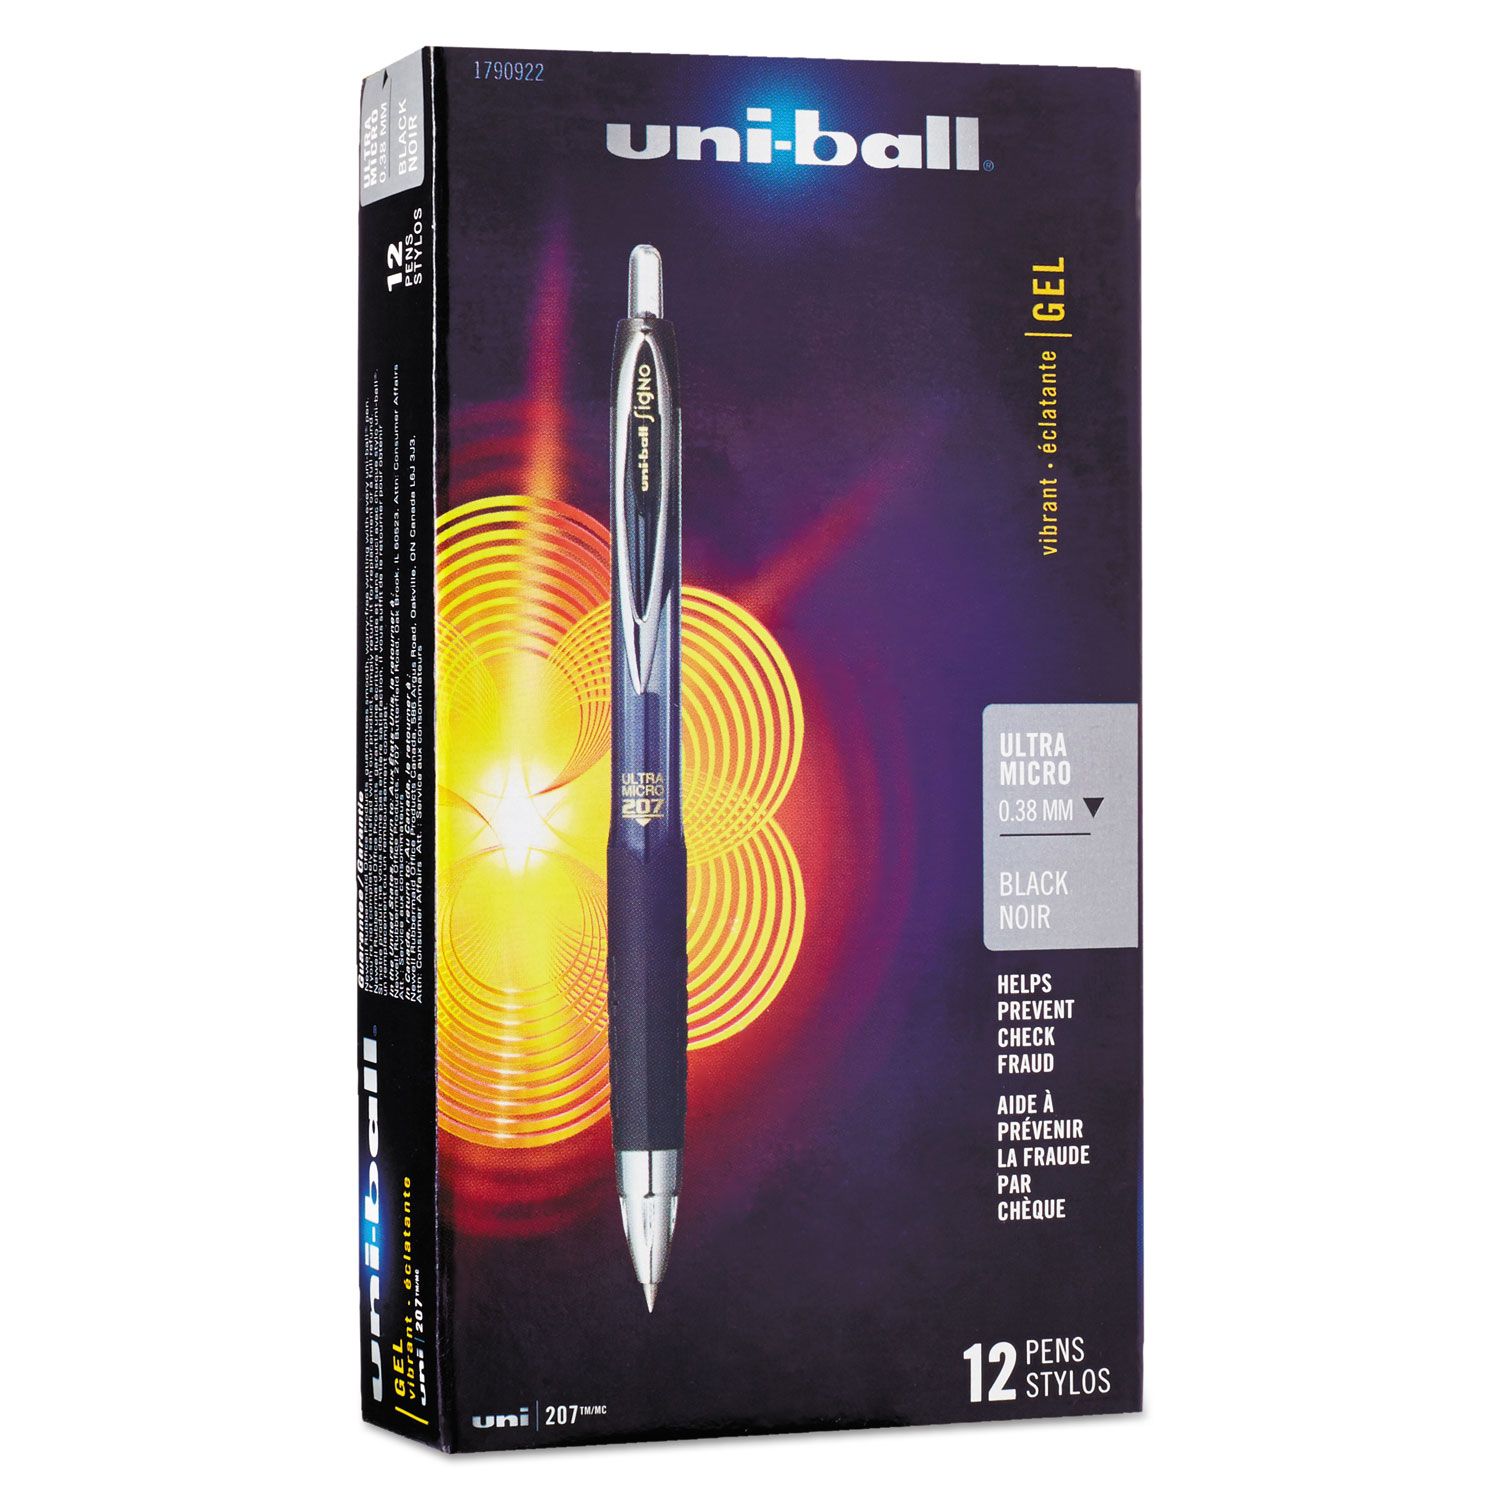  uni-ball 1790922 207 Signo Gel Ultra Micro Retractable Gel Pen, 0.38mm, Black Ink, Smoke Barrel (UBC1790922) 